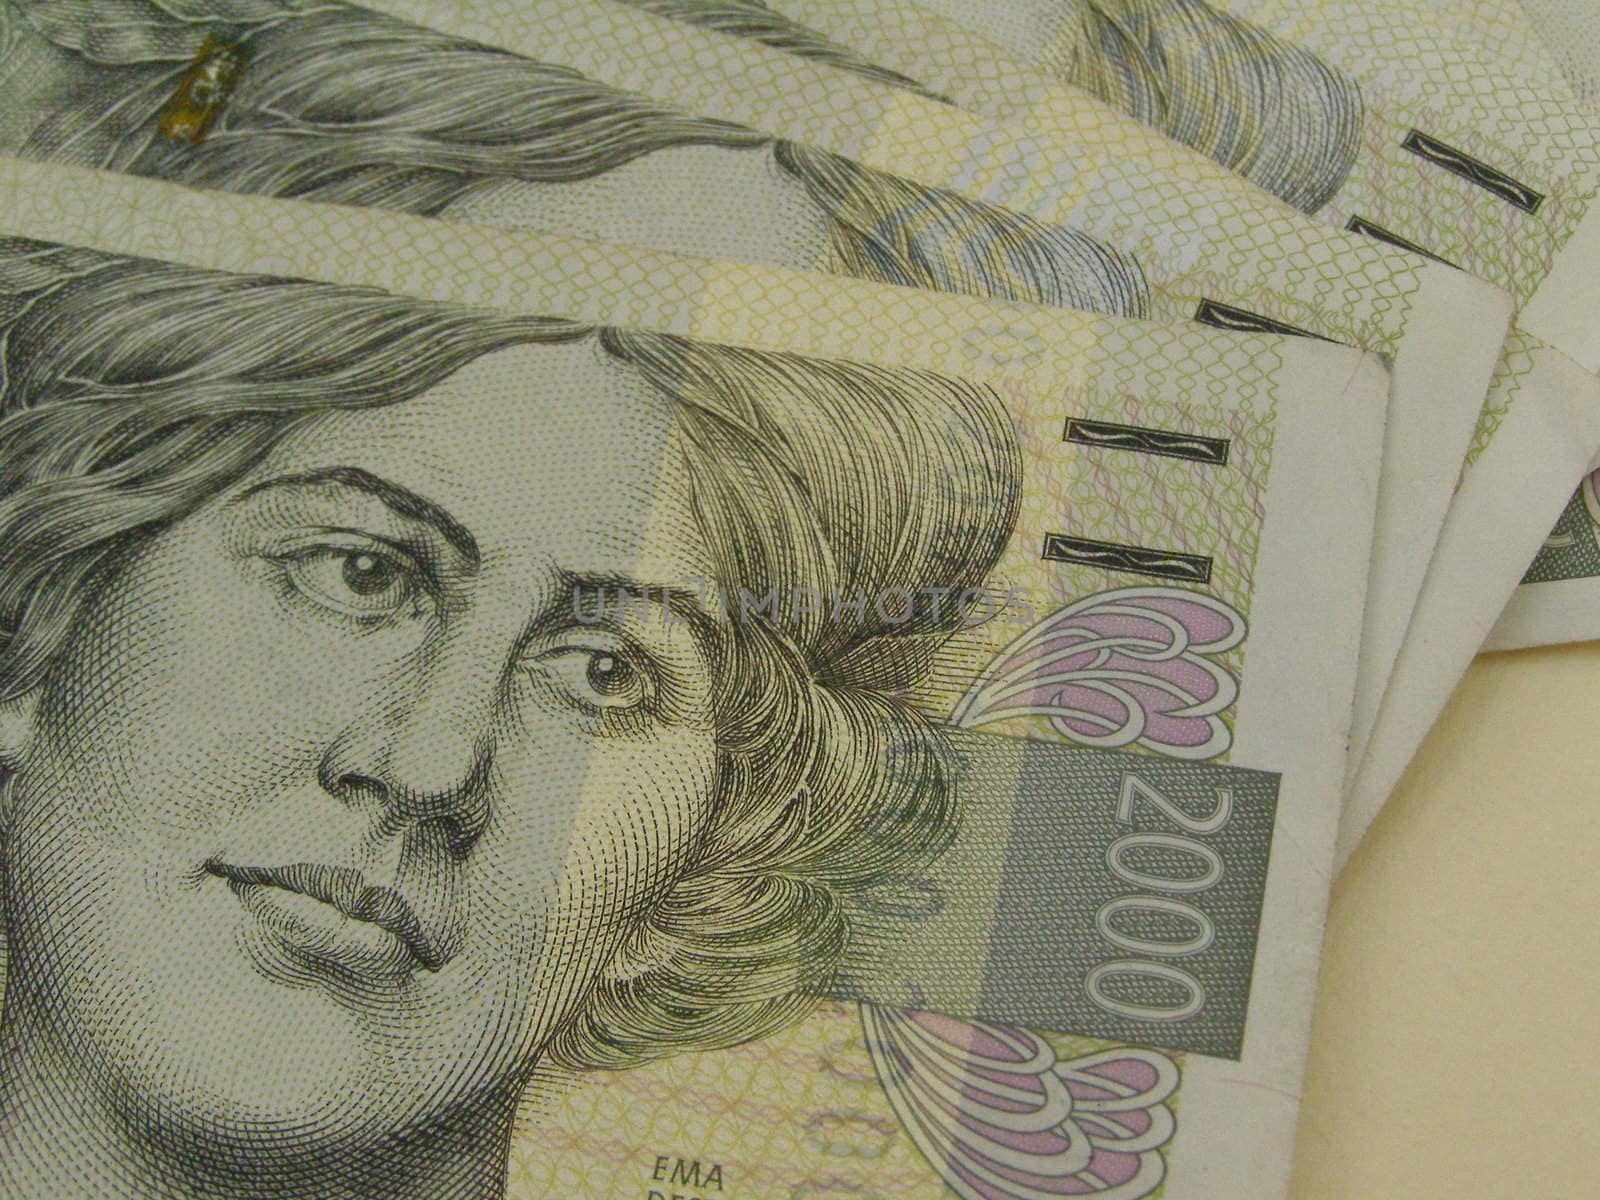 Czech money by paolo77